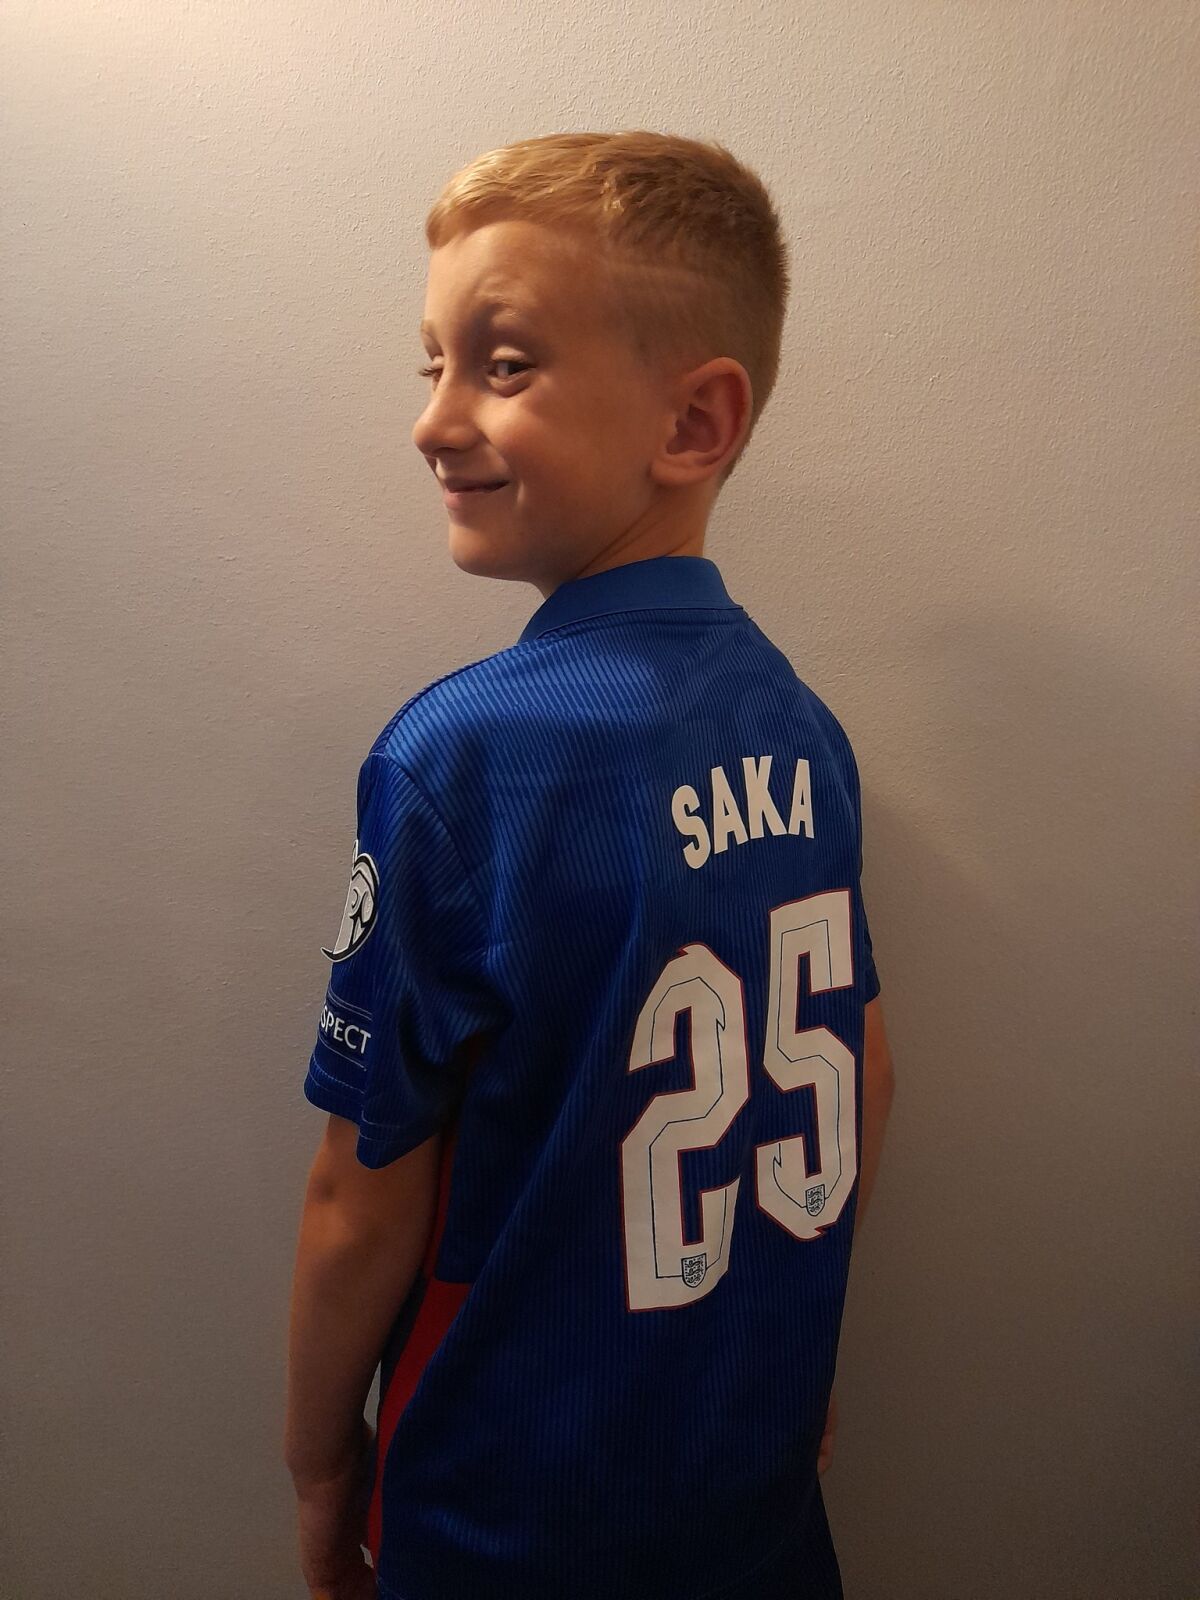 Kai Chapman wears a soccer shirt featuring Bukayo Saka’s number and surname